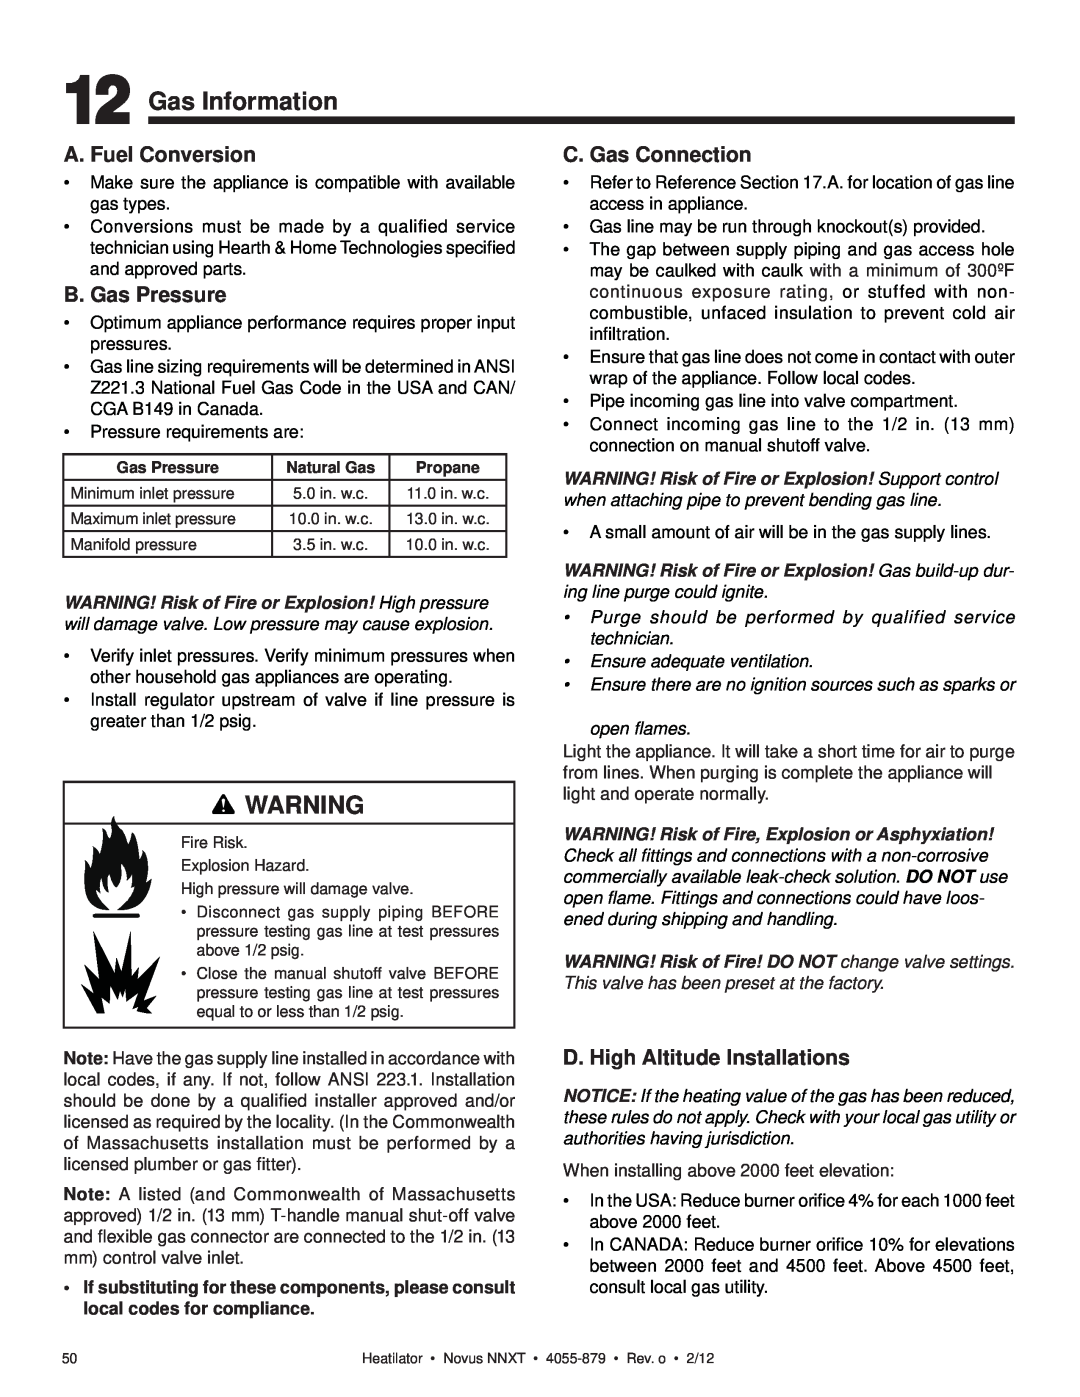 Heatiator NNXT4236I Gas Information, A. Fuel Conversion, B. Gas Pressure, C. Gas Connection, Ensure adequate ventilation 